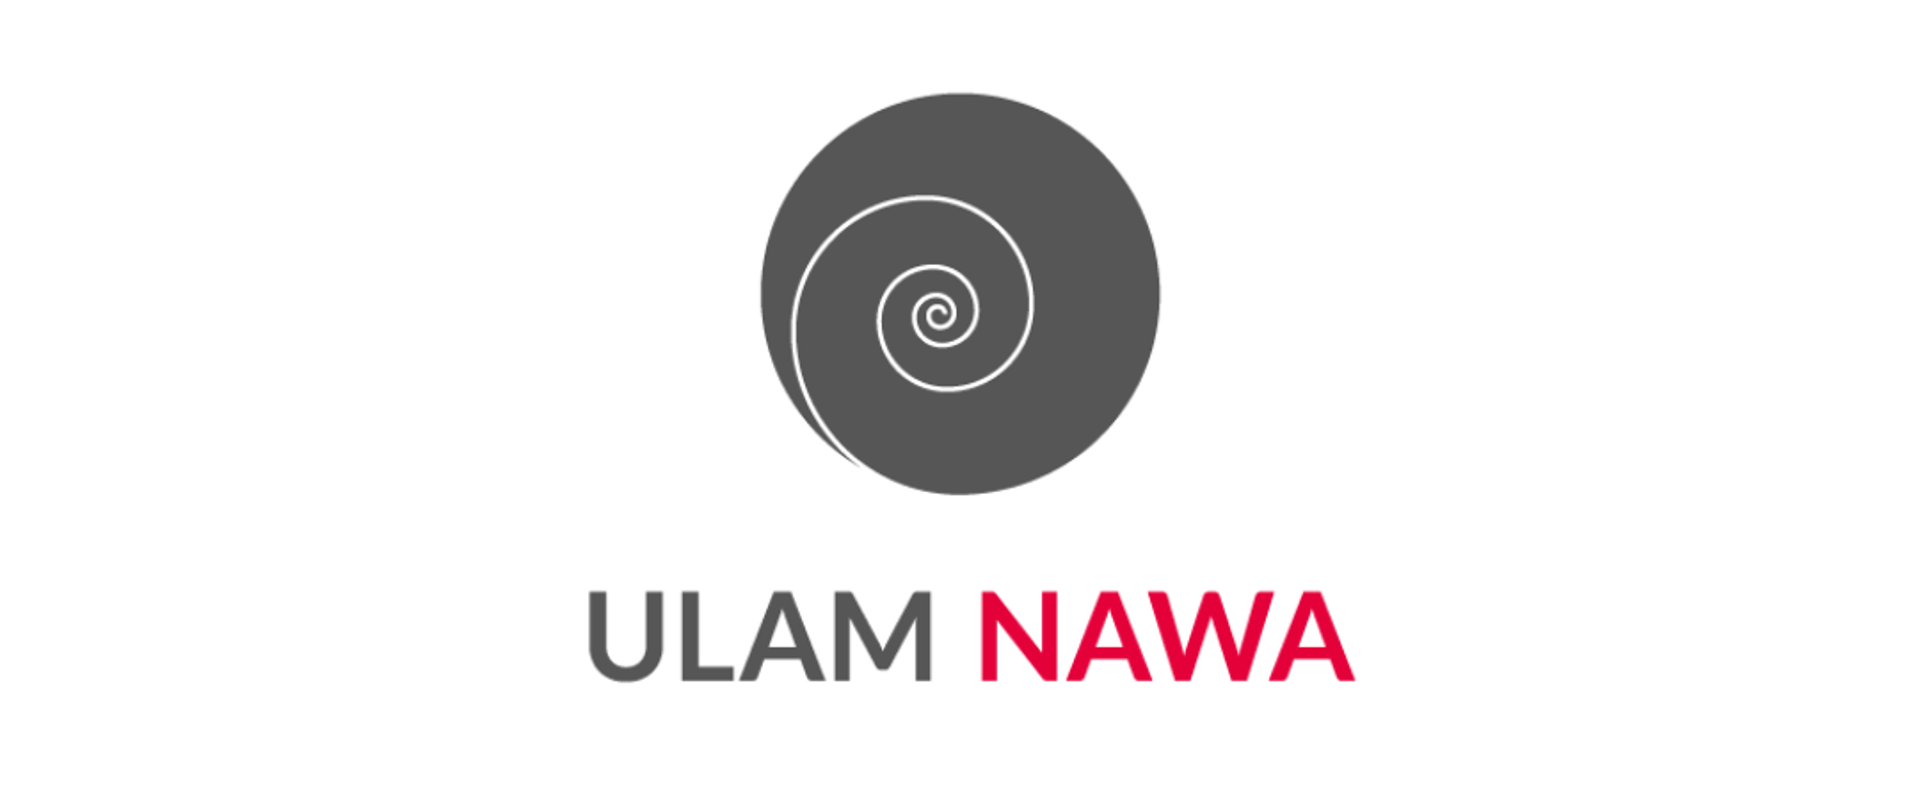 Ulam NAWA Program